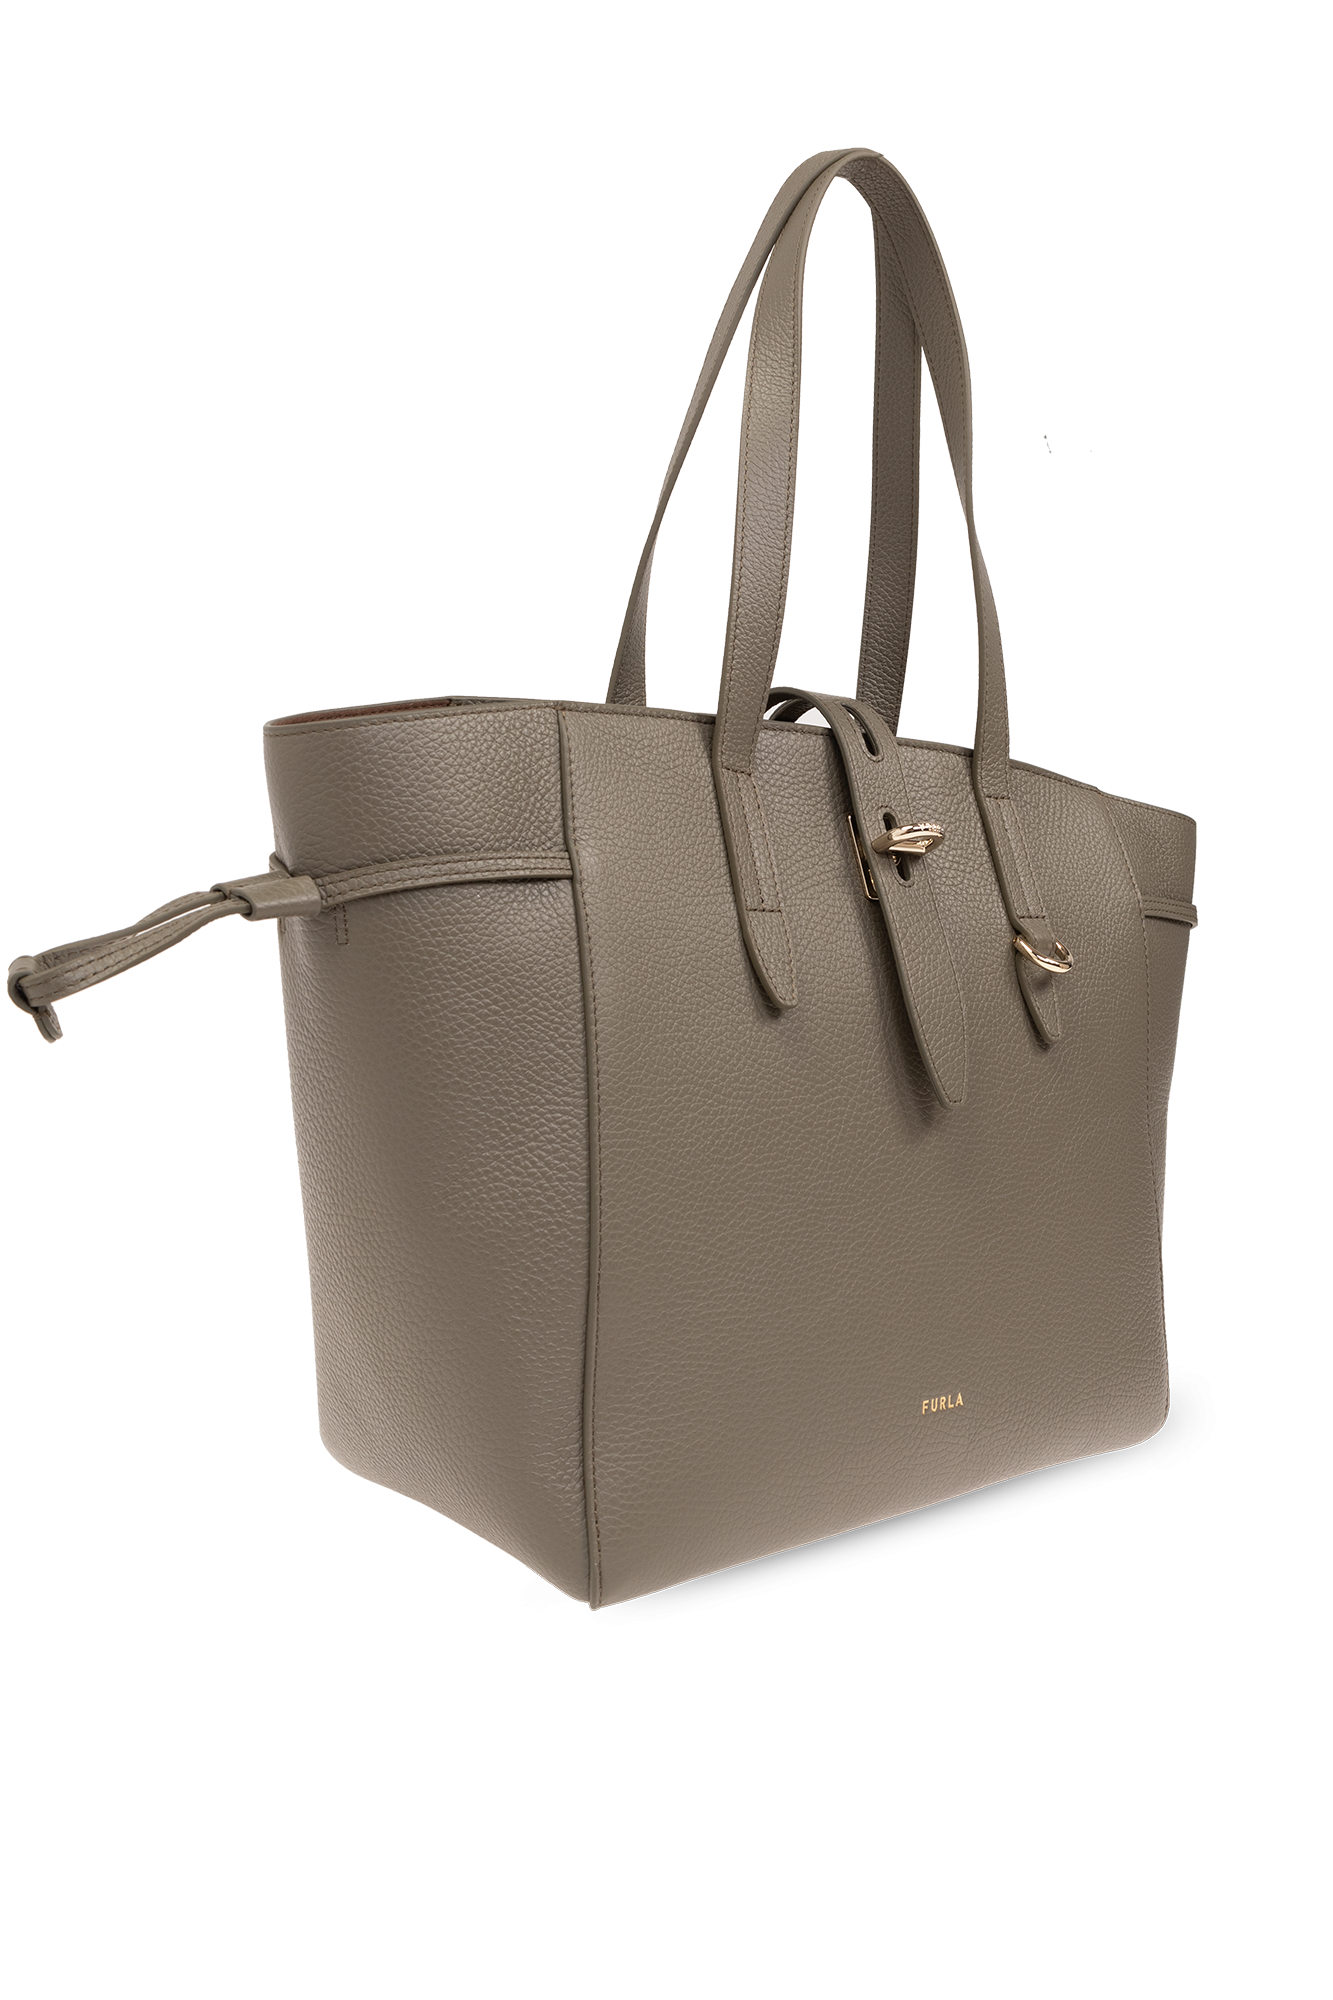 Furla ‘Net Medium’ shopper bag